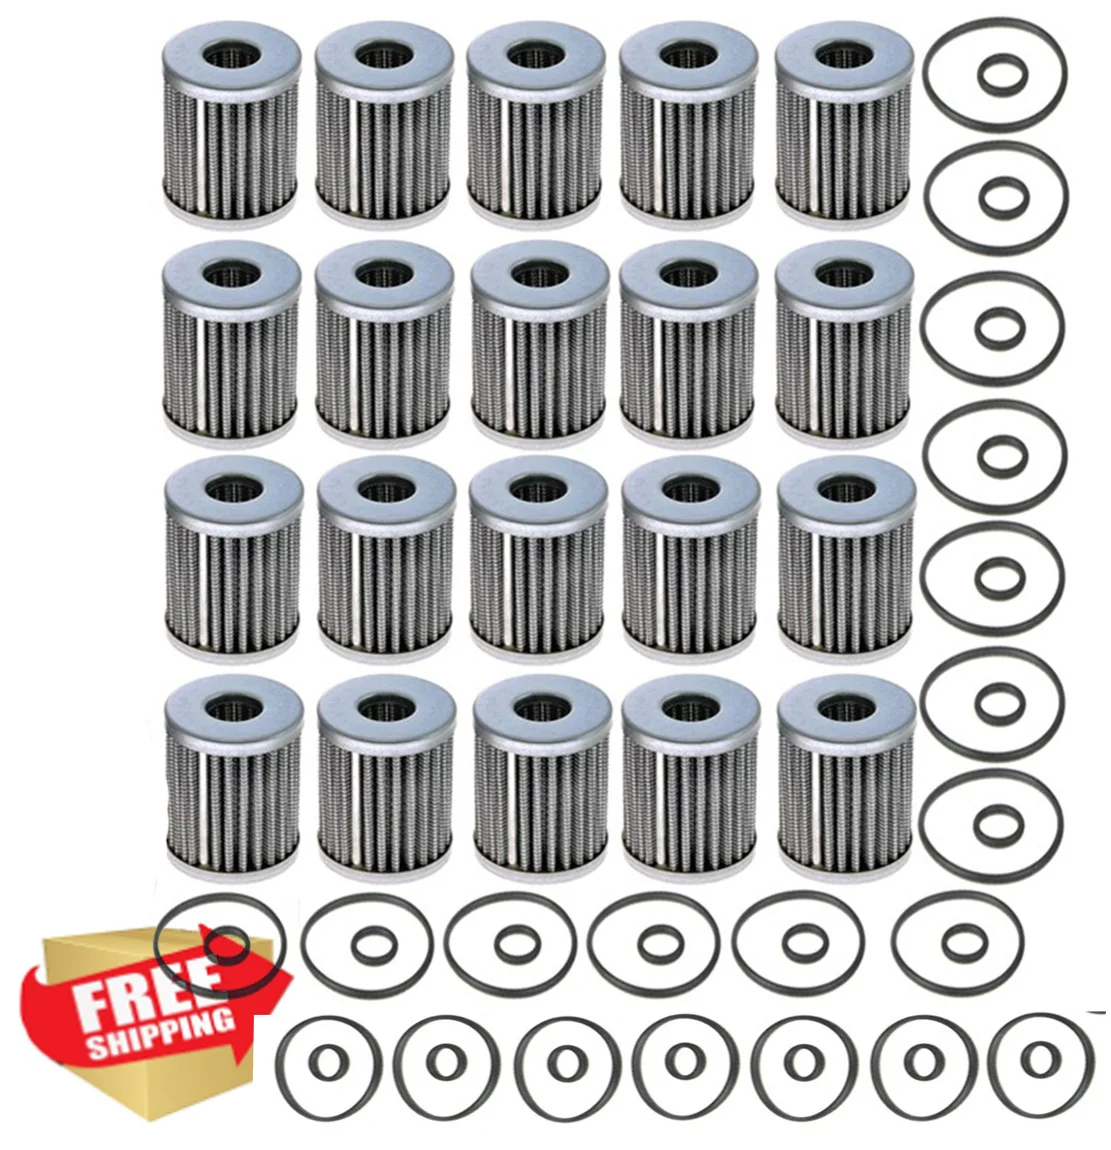 

20x Brc Type LPG CNG GPL Gas Filter & Gasket Set BRC MTM Type Filter Cartridge Set - Fibreglass with o-rings